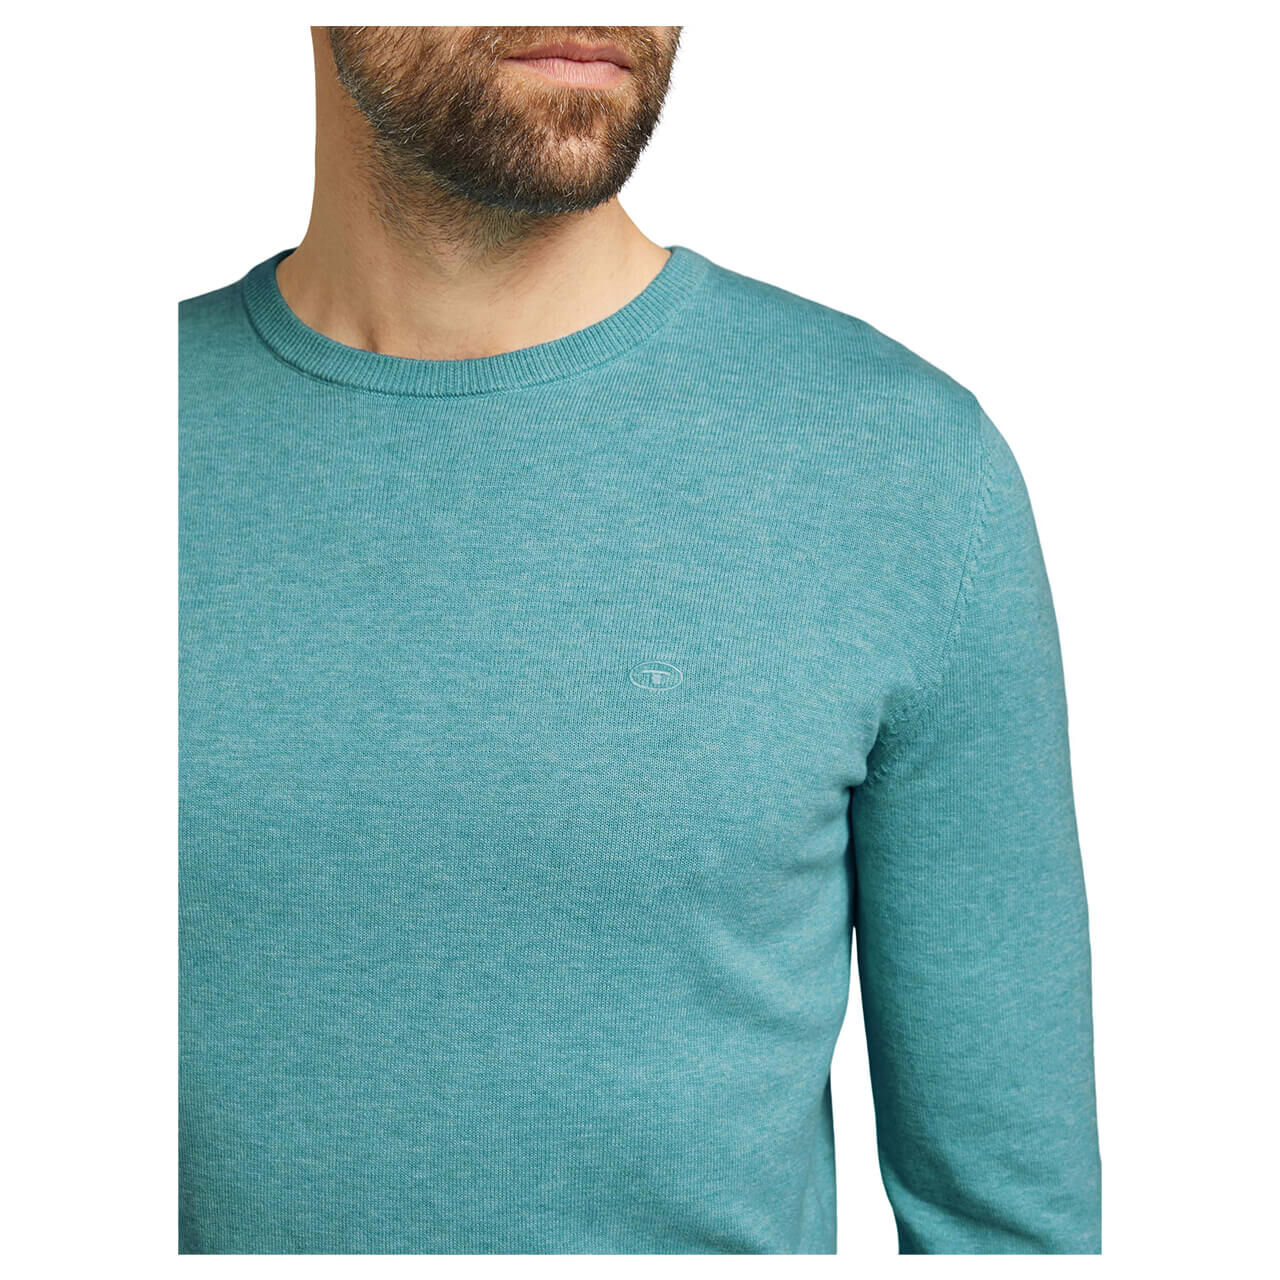 Tom Tailor  Basic Crew-neck Sweater für Herren in Türkisblau, FarbNr.: 29541